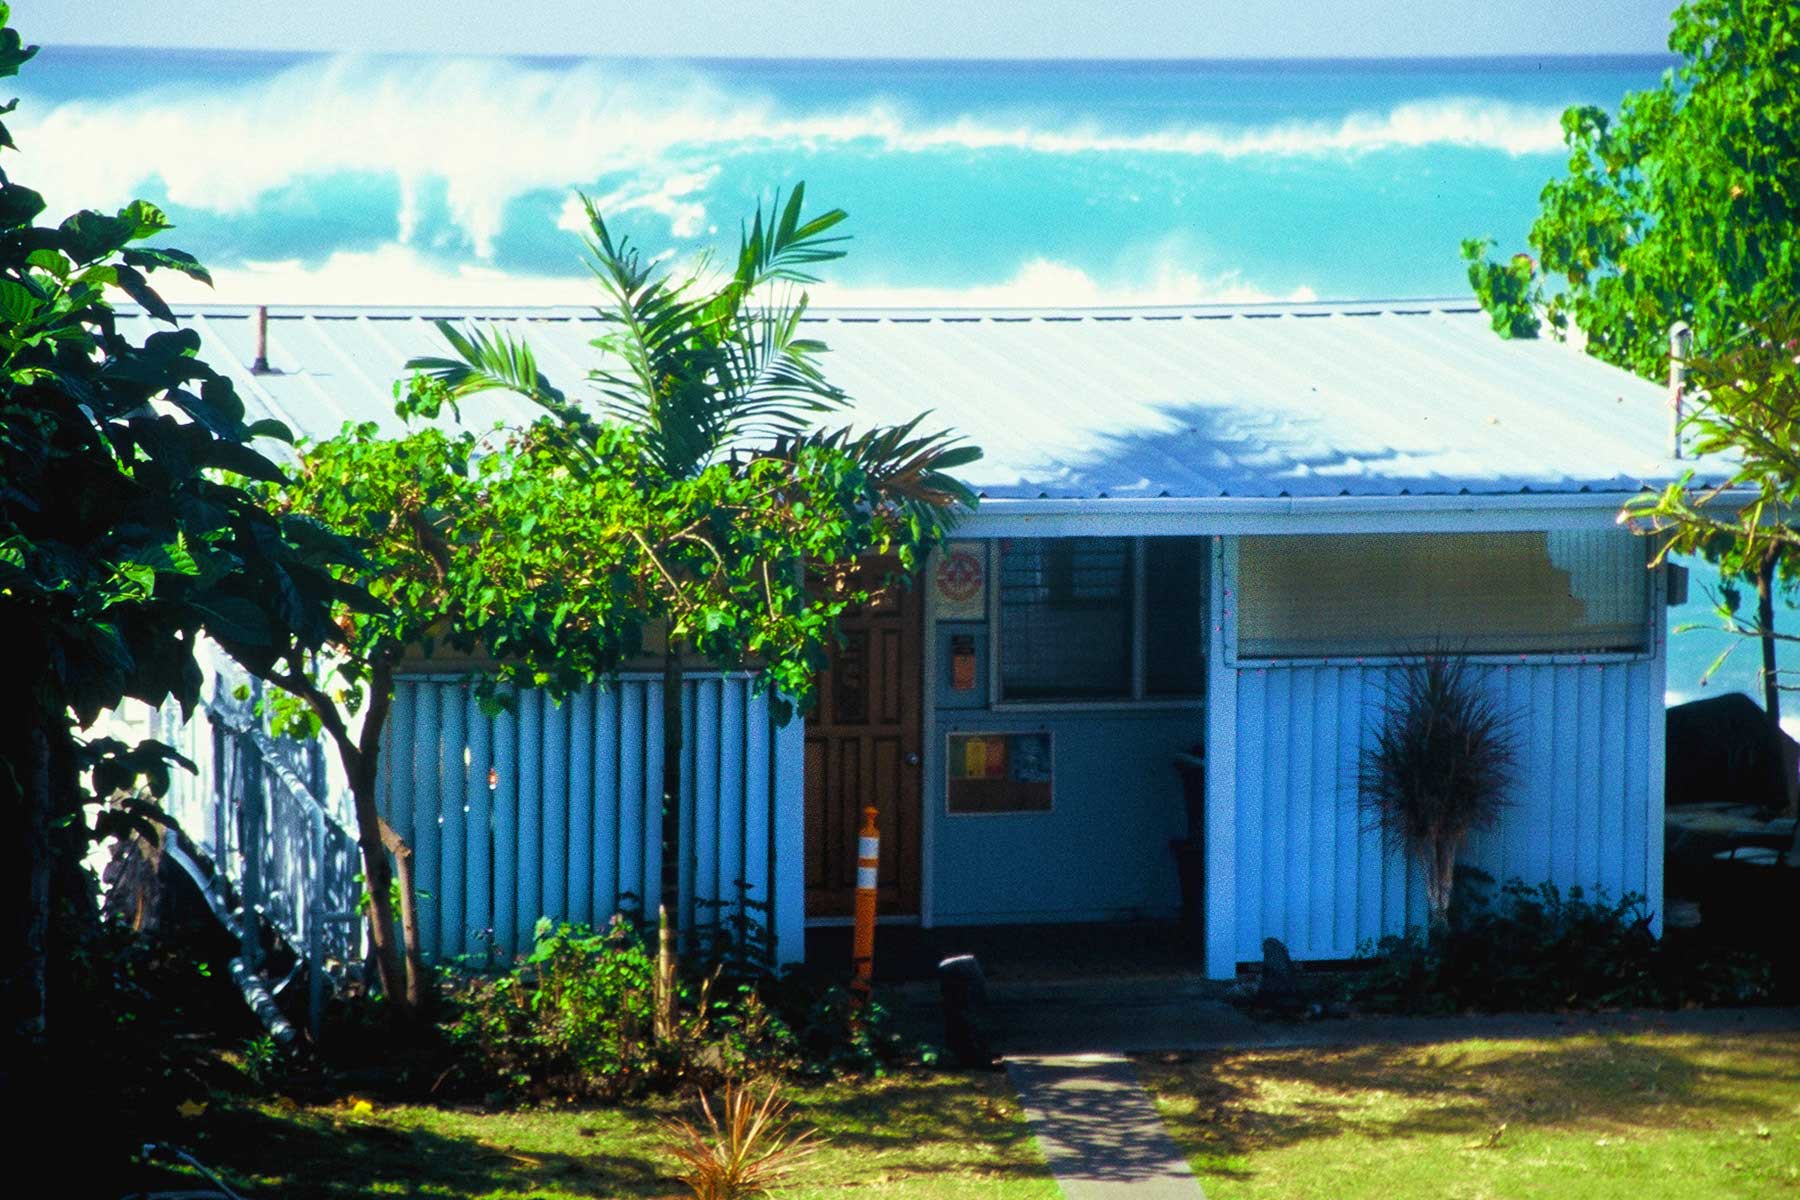 Hawaii Lifeguard Surf Instructors (HLSI) Beach House, Kailua-Kona | Surf Doctor Steven Andrew Martin | Kahaluu Beach Park Hawaii